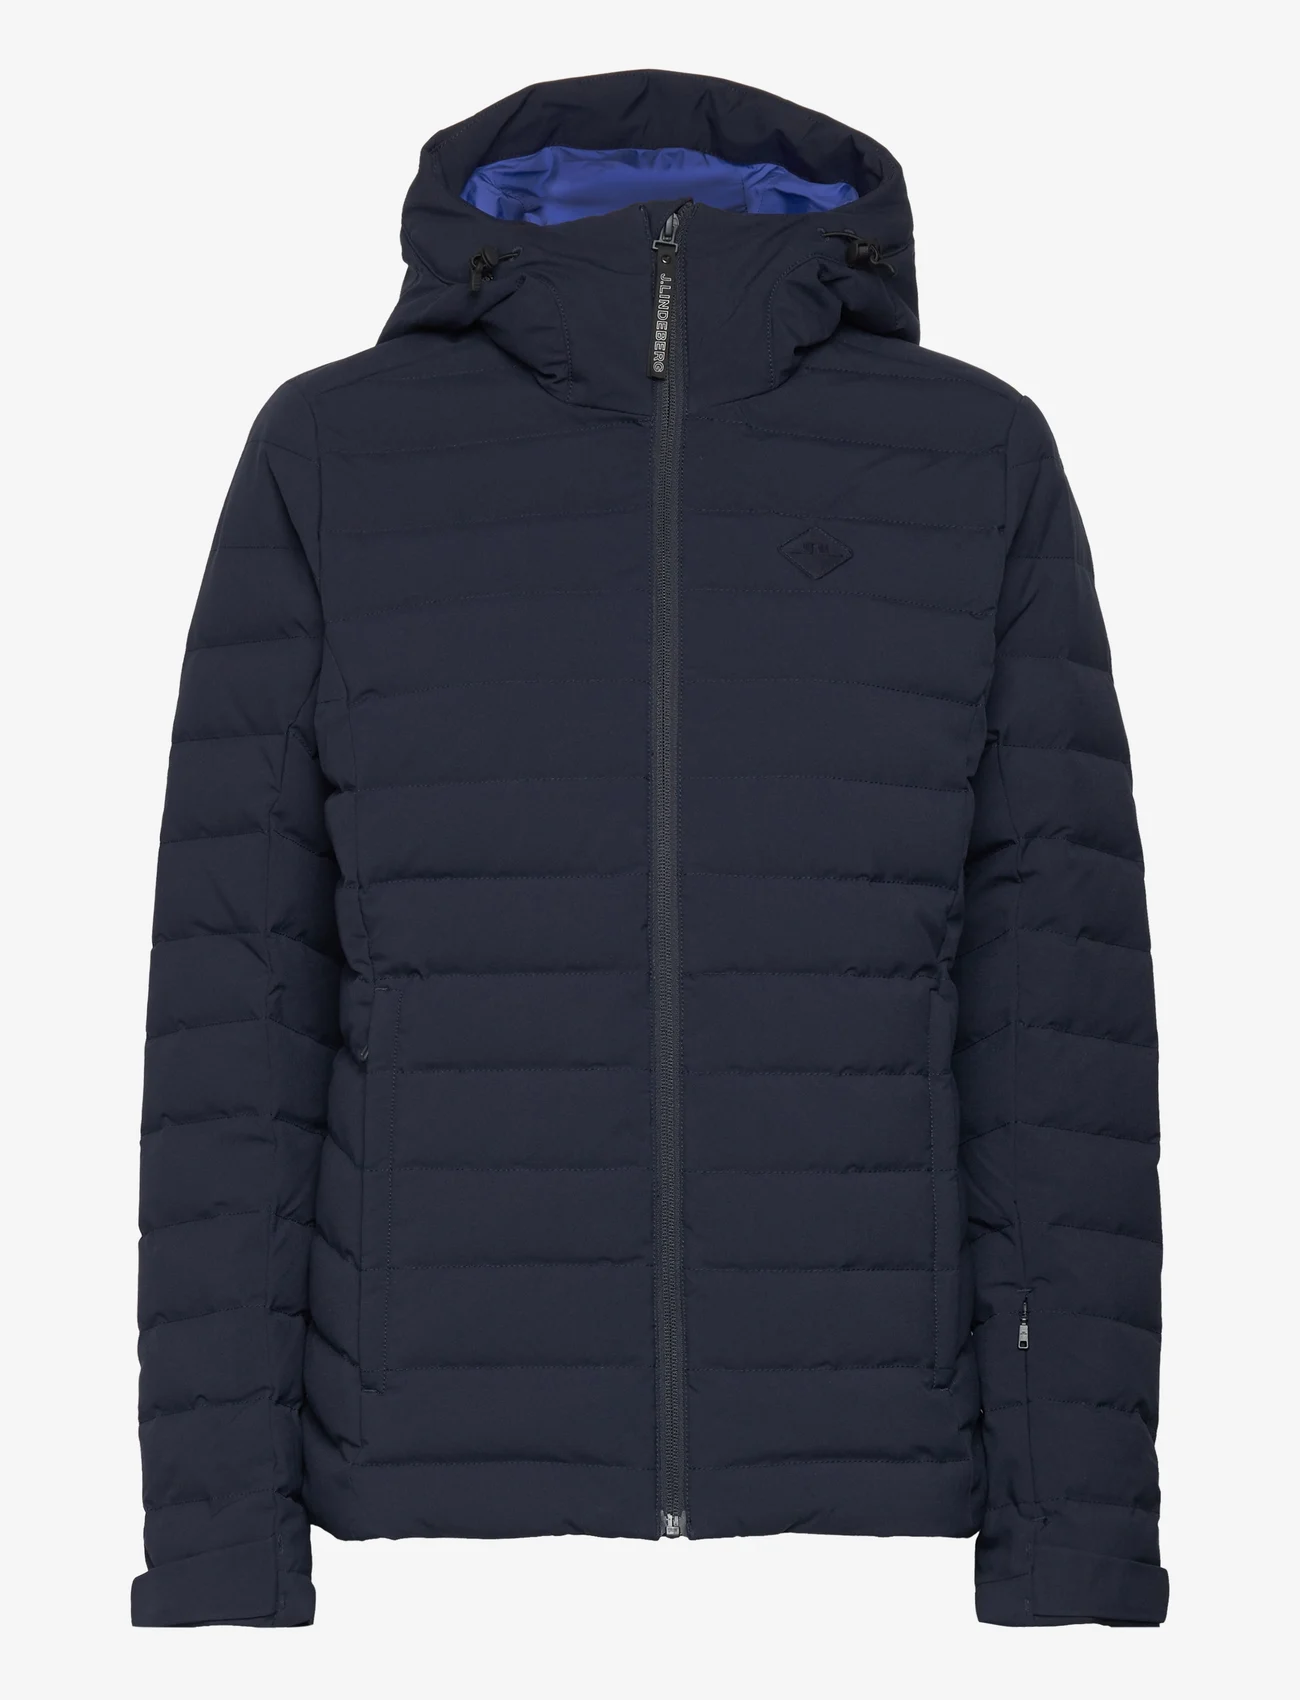 J. Lindeberg - W Thermic Down Jacket - winter jacket - jl navy - 0